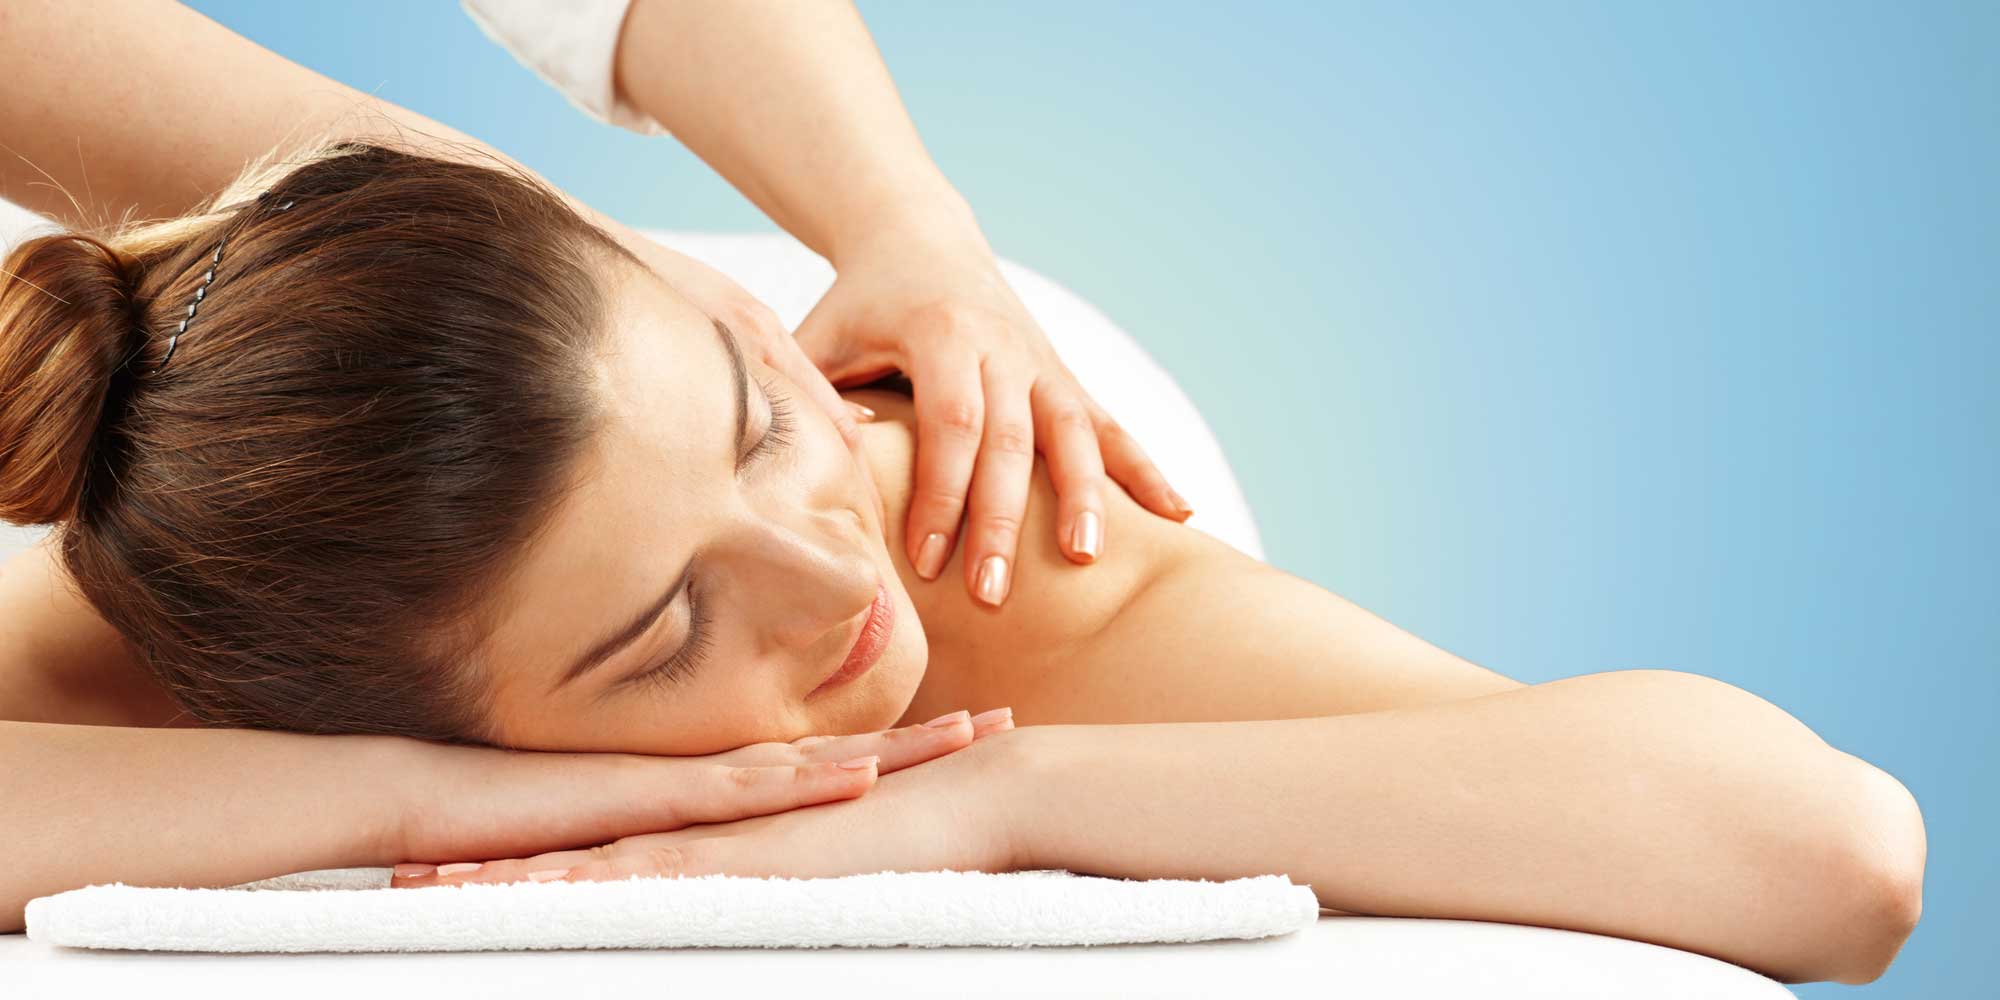 Self-Massage: Reduce Anxiety, Support Immunity - Massage Therapy Center  Palo Alto, CA